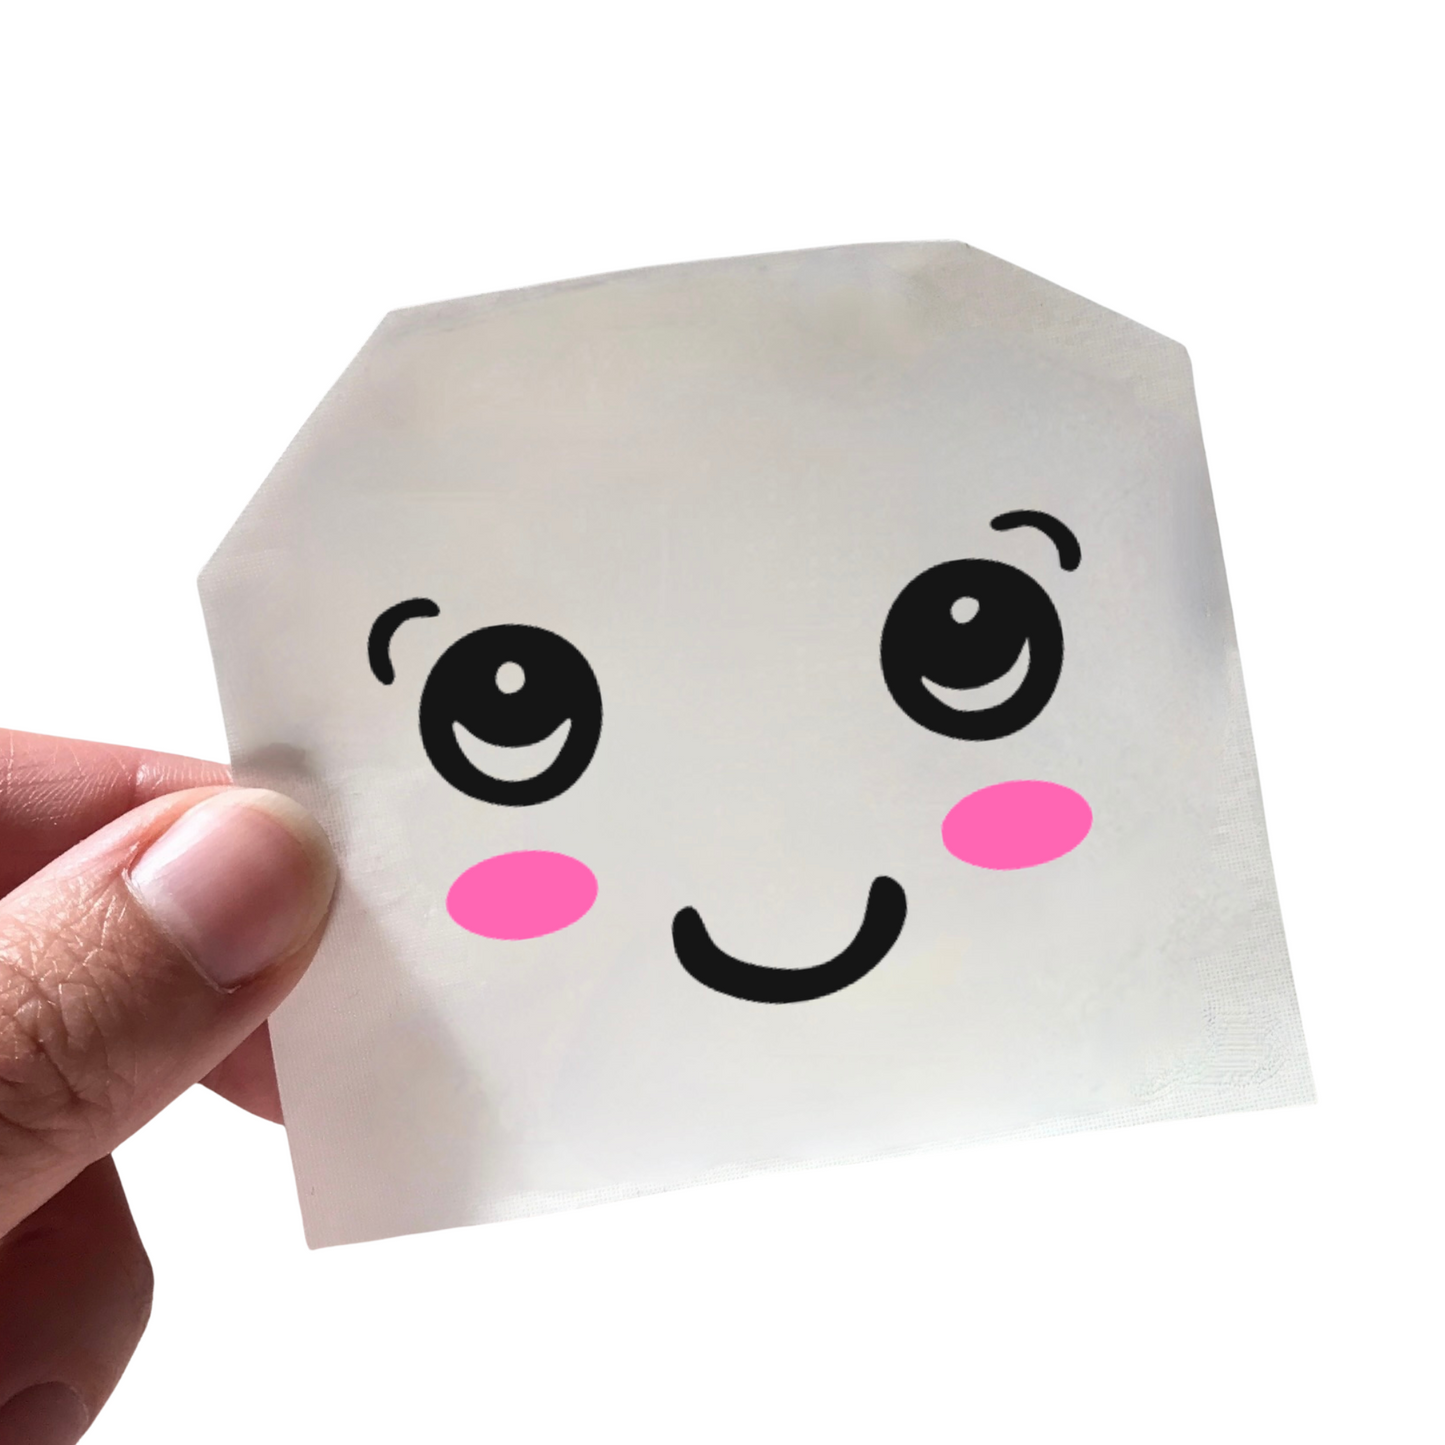 Sticker face - happy sticker for flower pot - cute face - face pot - gift mom girlfriend child - DIY sticker personalized